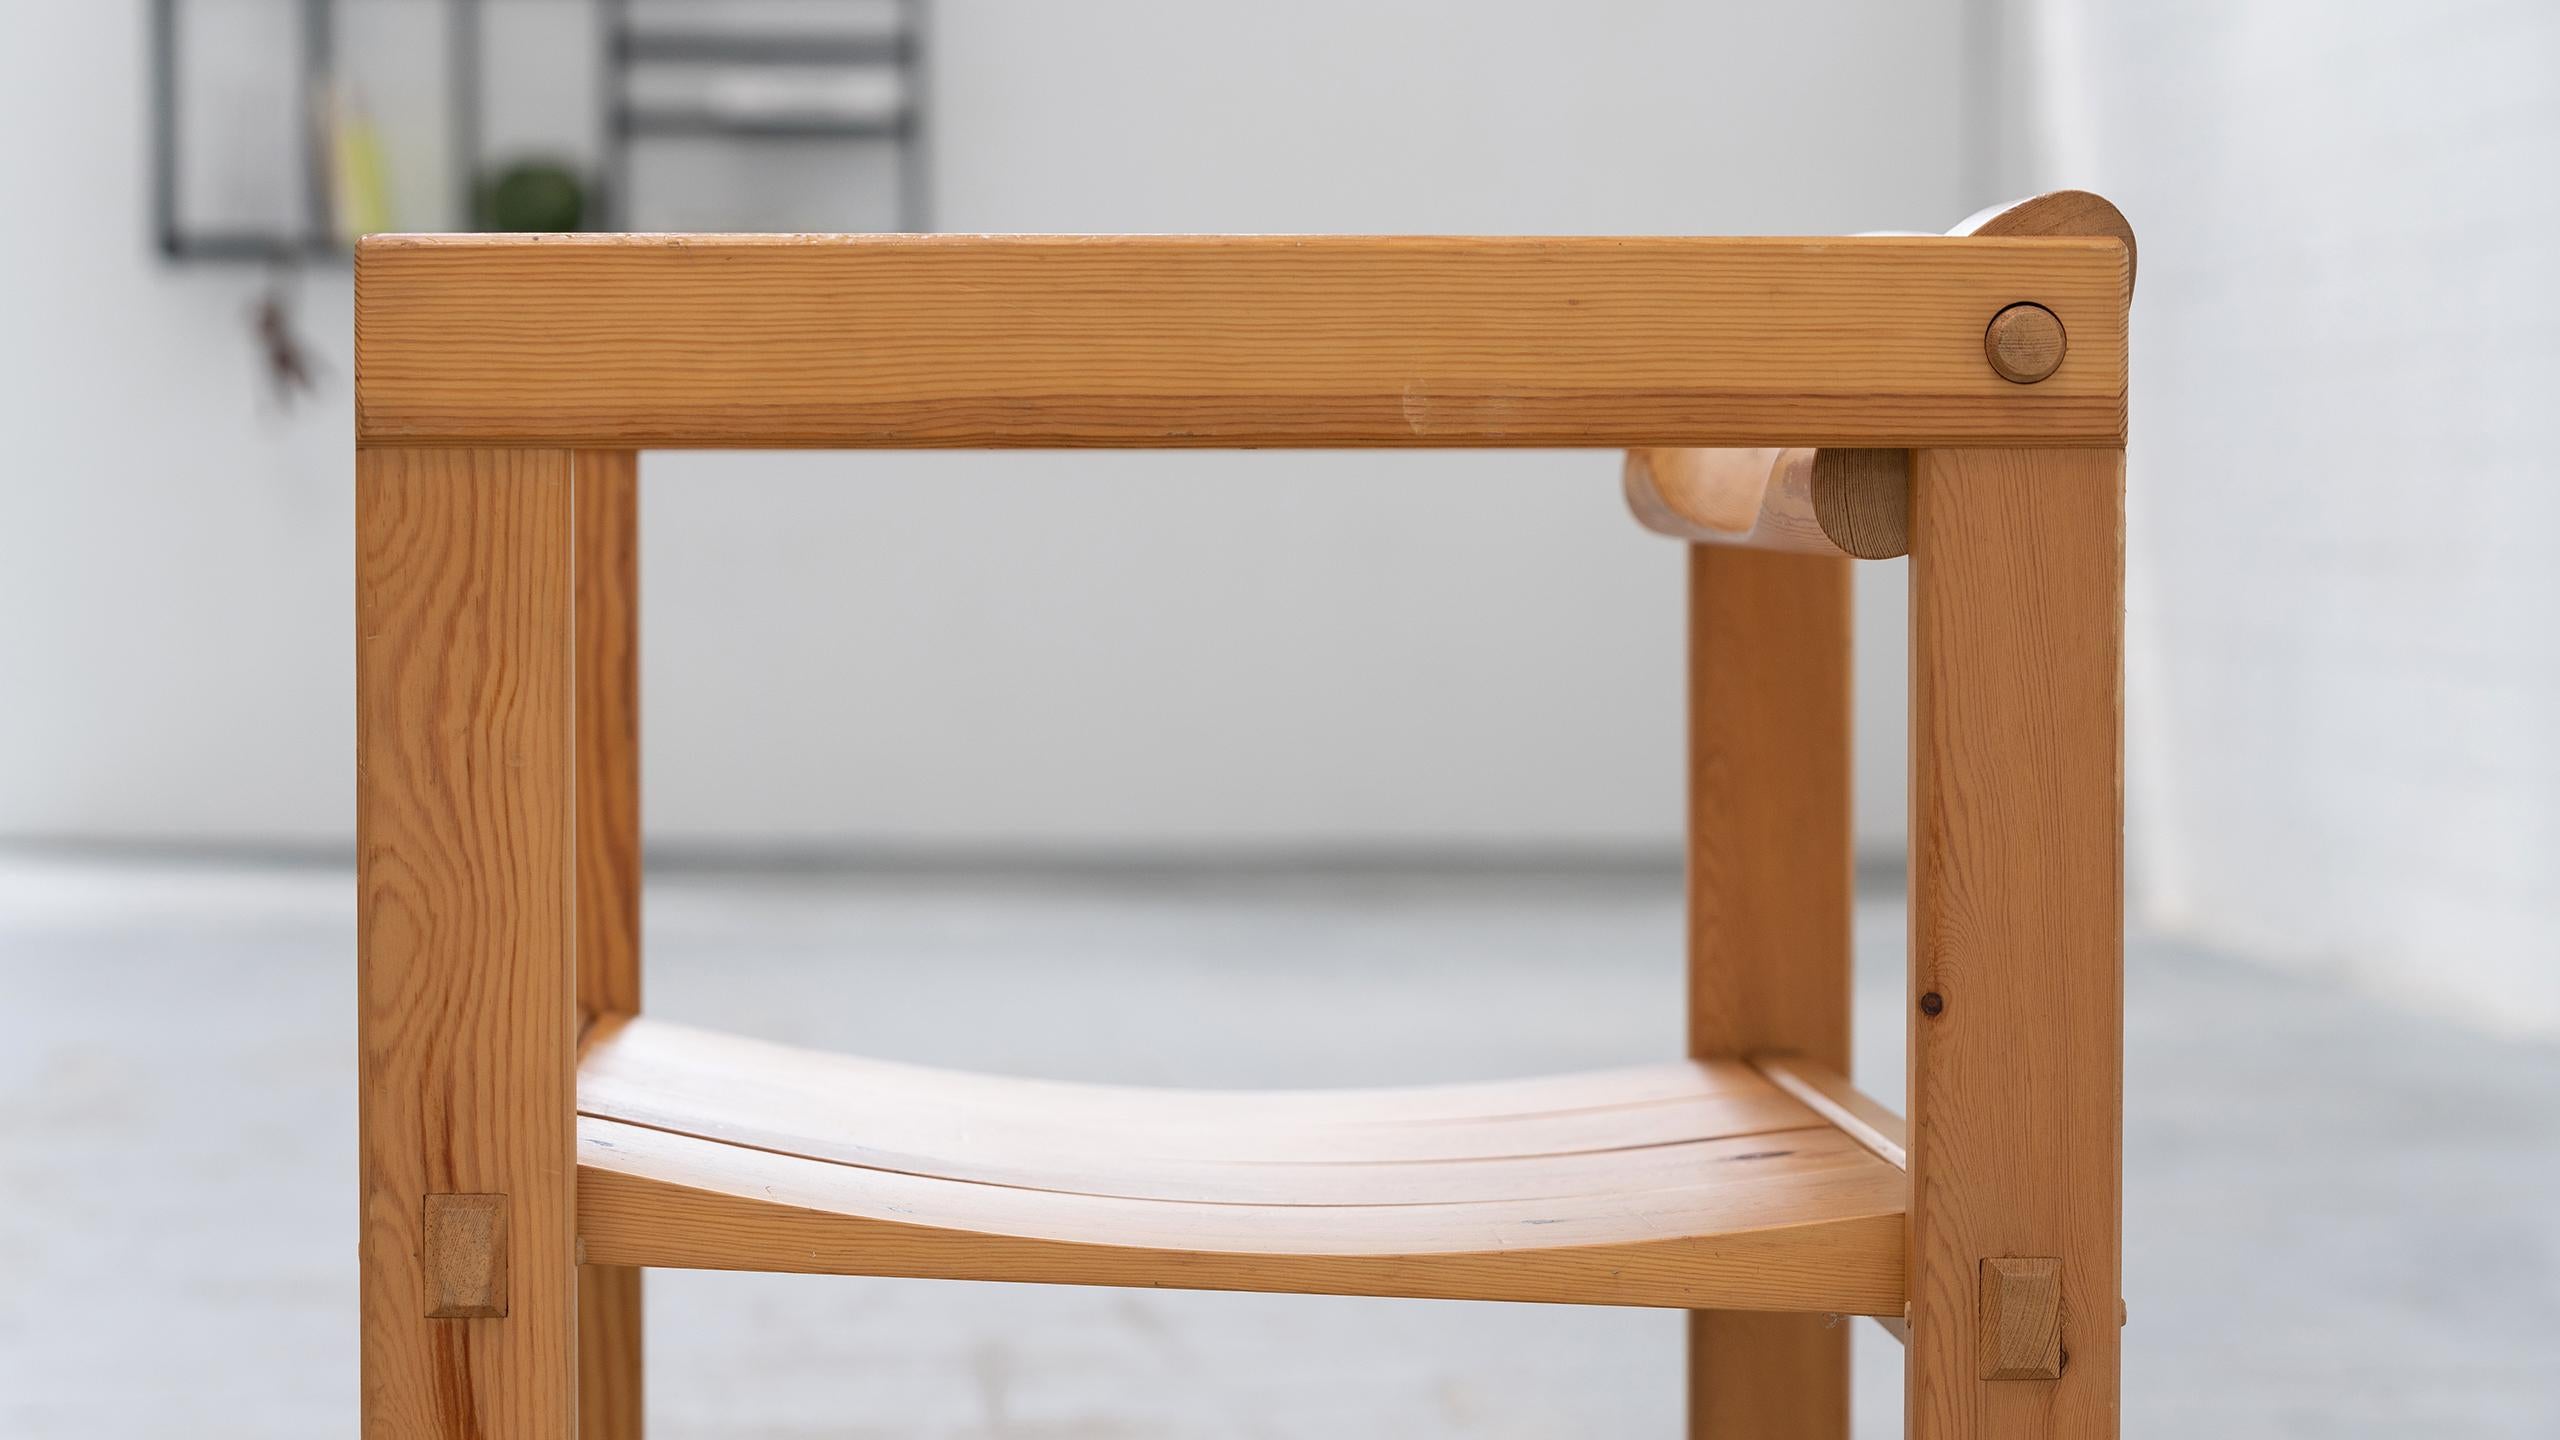 Scandinavian Modern Scandinavian Chair in Pine by Edvin Helseth in 1964 for Trybo Furniture, Norway